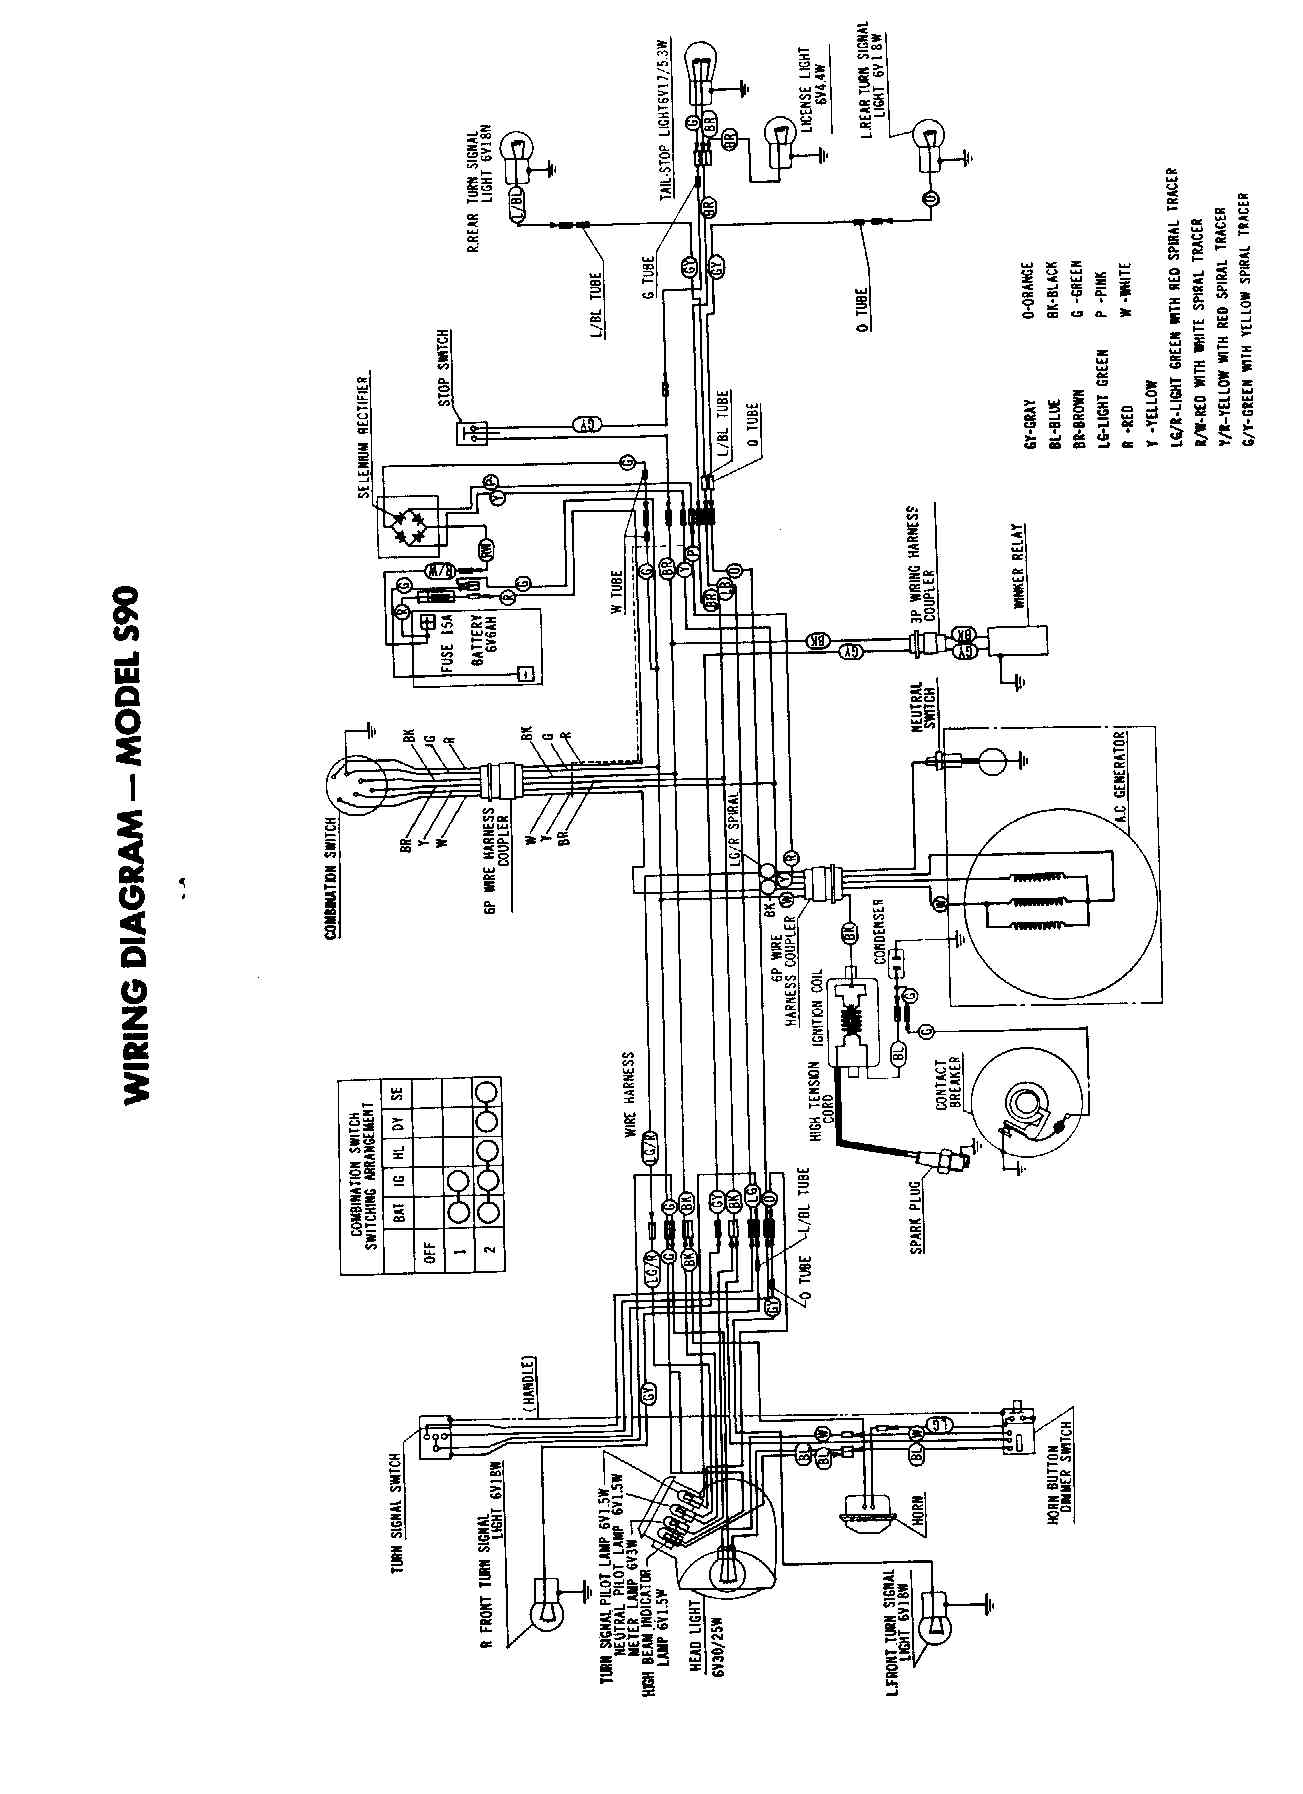 1980 Honda xr200 engine diagram #5